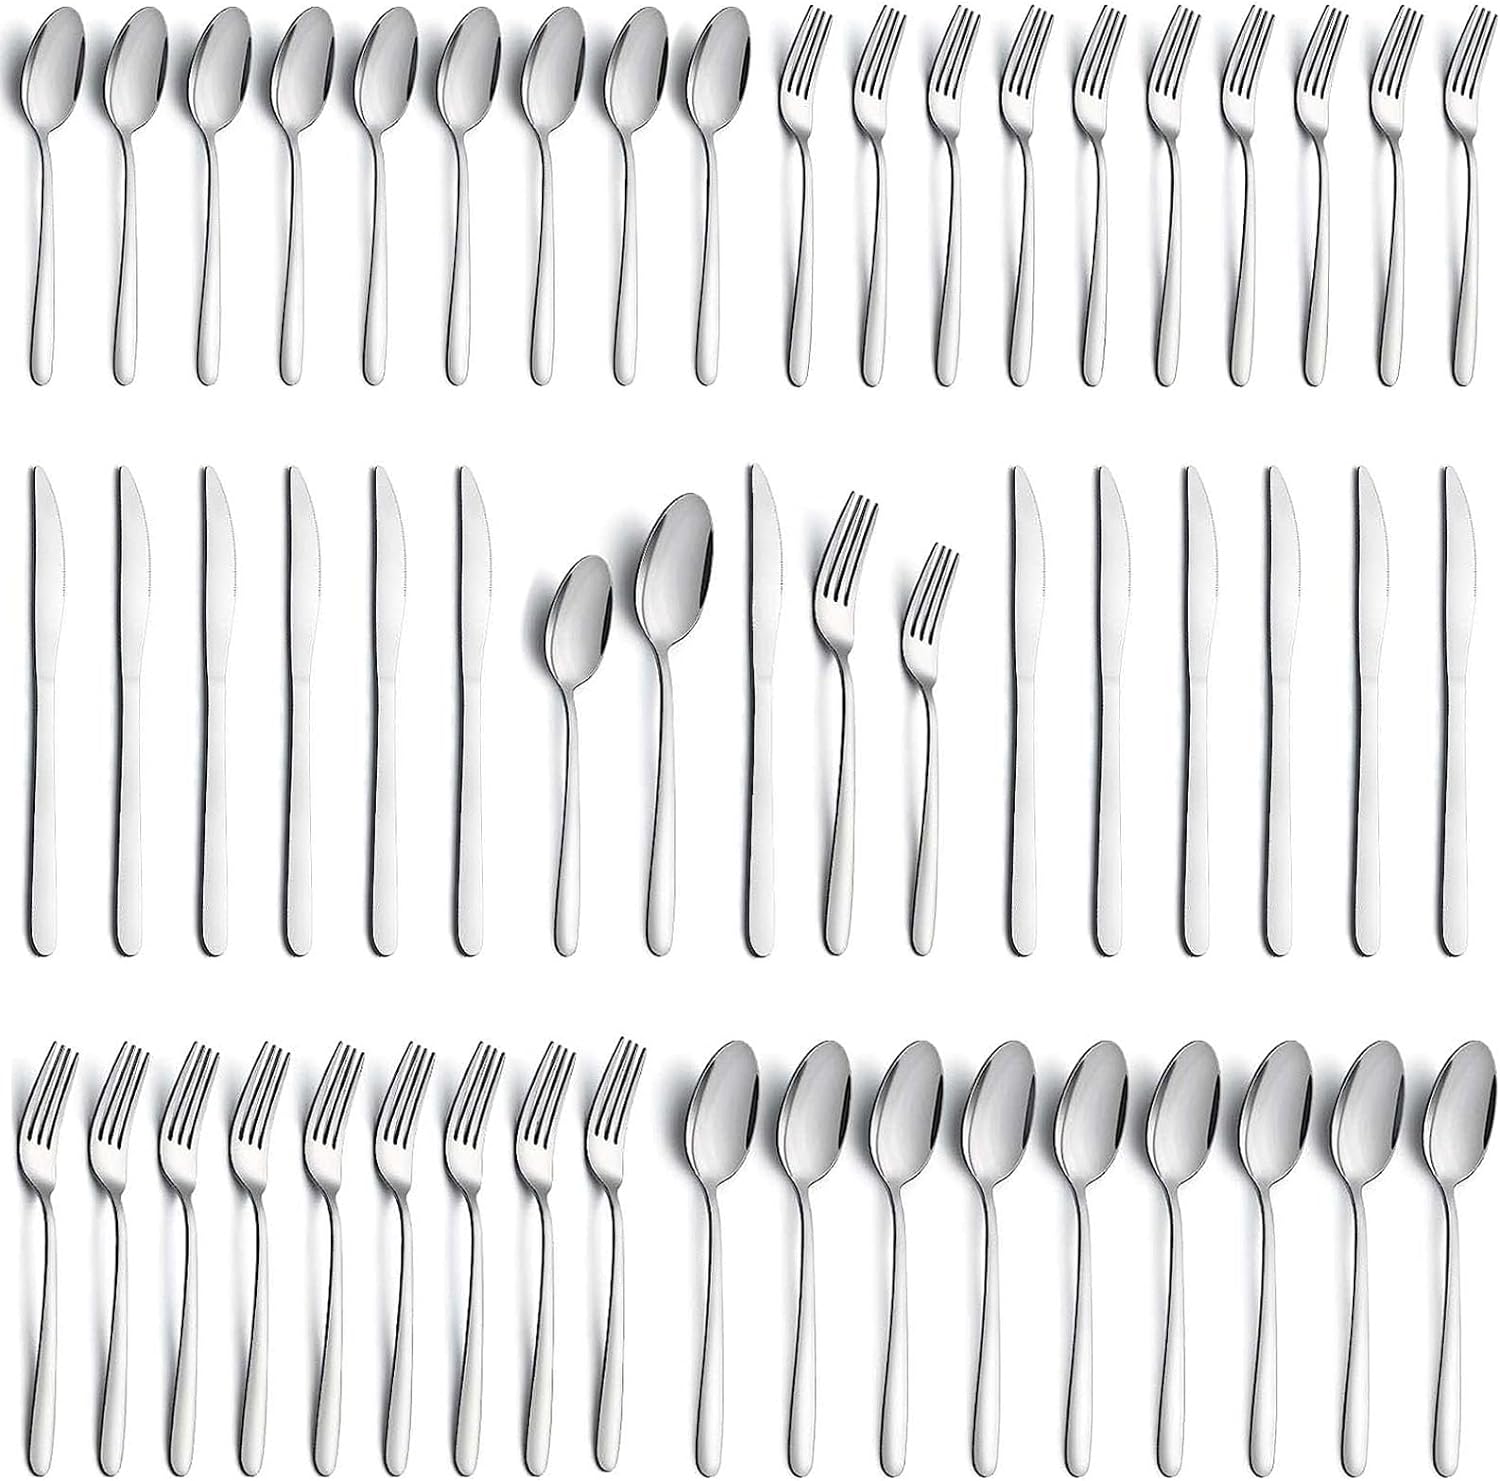 60 Piece Stainless Steel Silverware Set for 12, Premium Polished Flatware Sets, Forks Spoons and Knives Set, Food-Grade Cutlery Set for Home Kitchen Restaurant Hotel, Dishwasher Safe Utensils Set